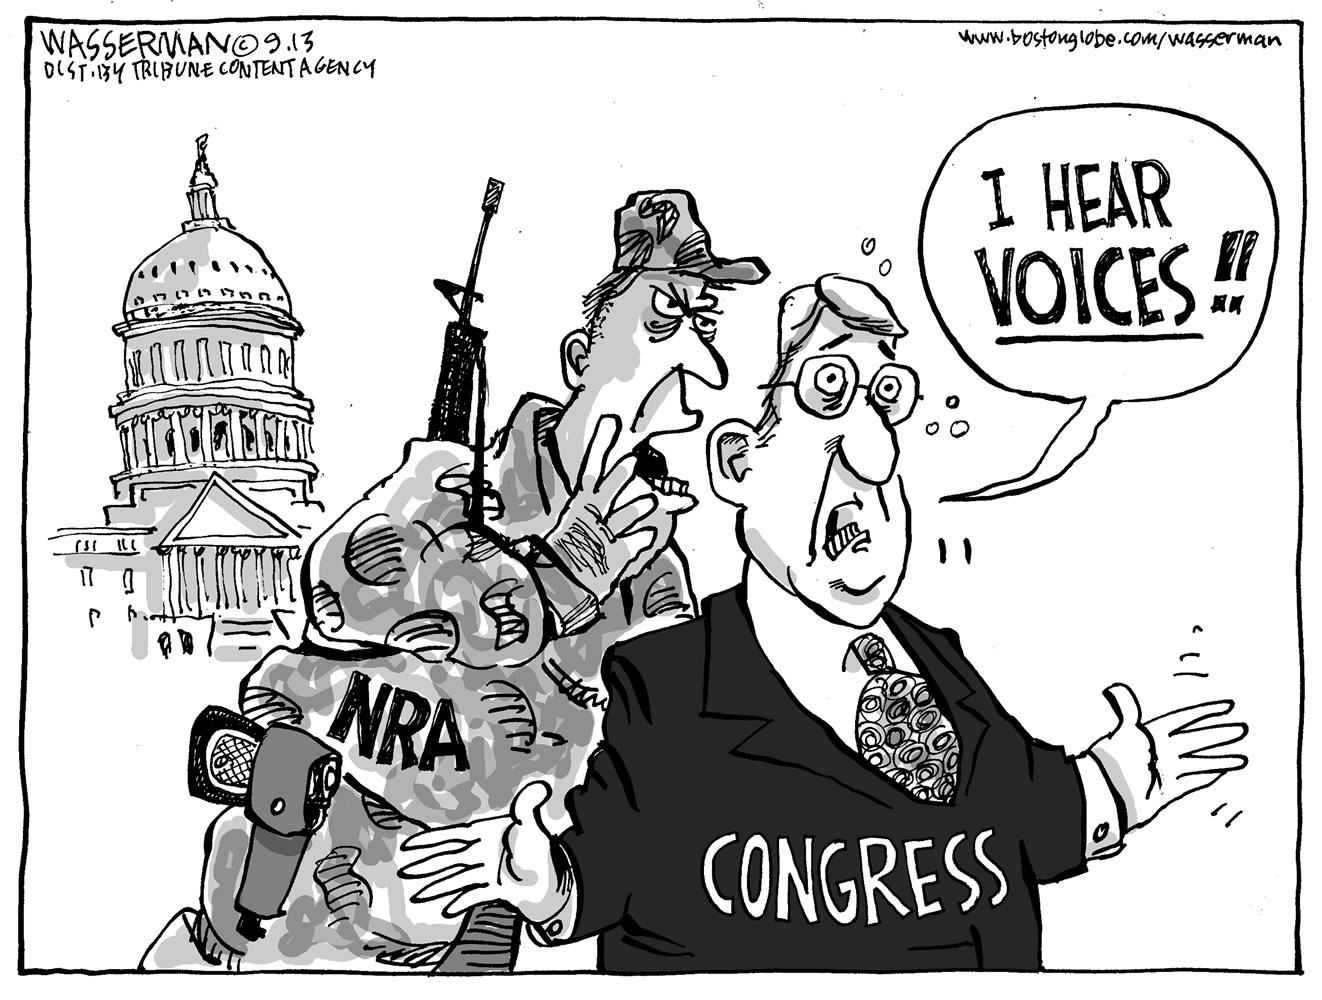 The NRA has Congress' ear.